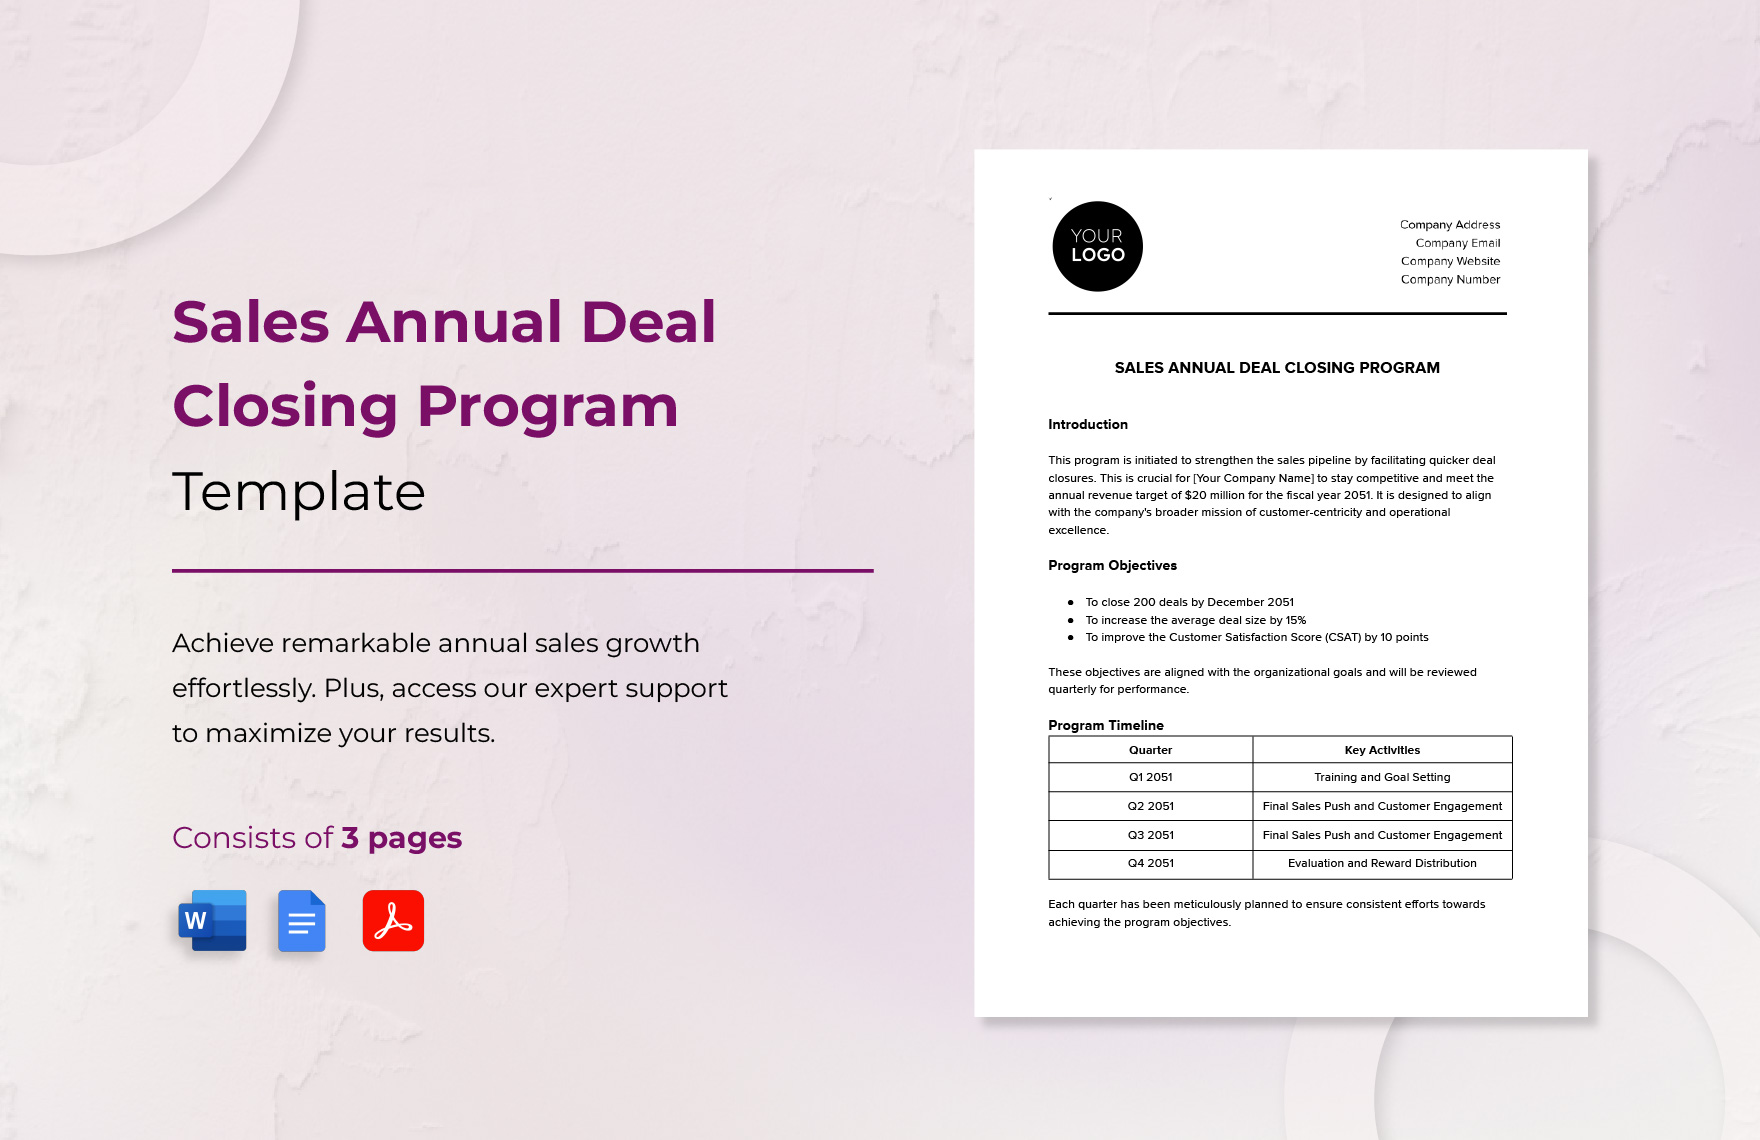 Sales Annual Deal Closing Program Template